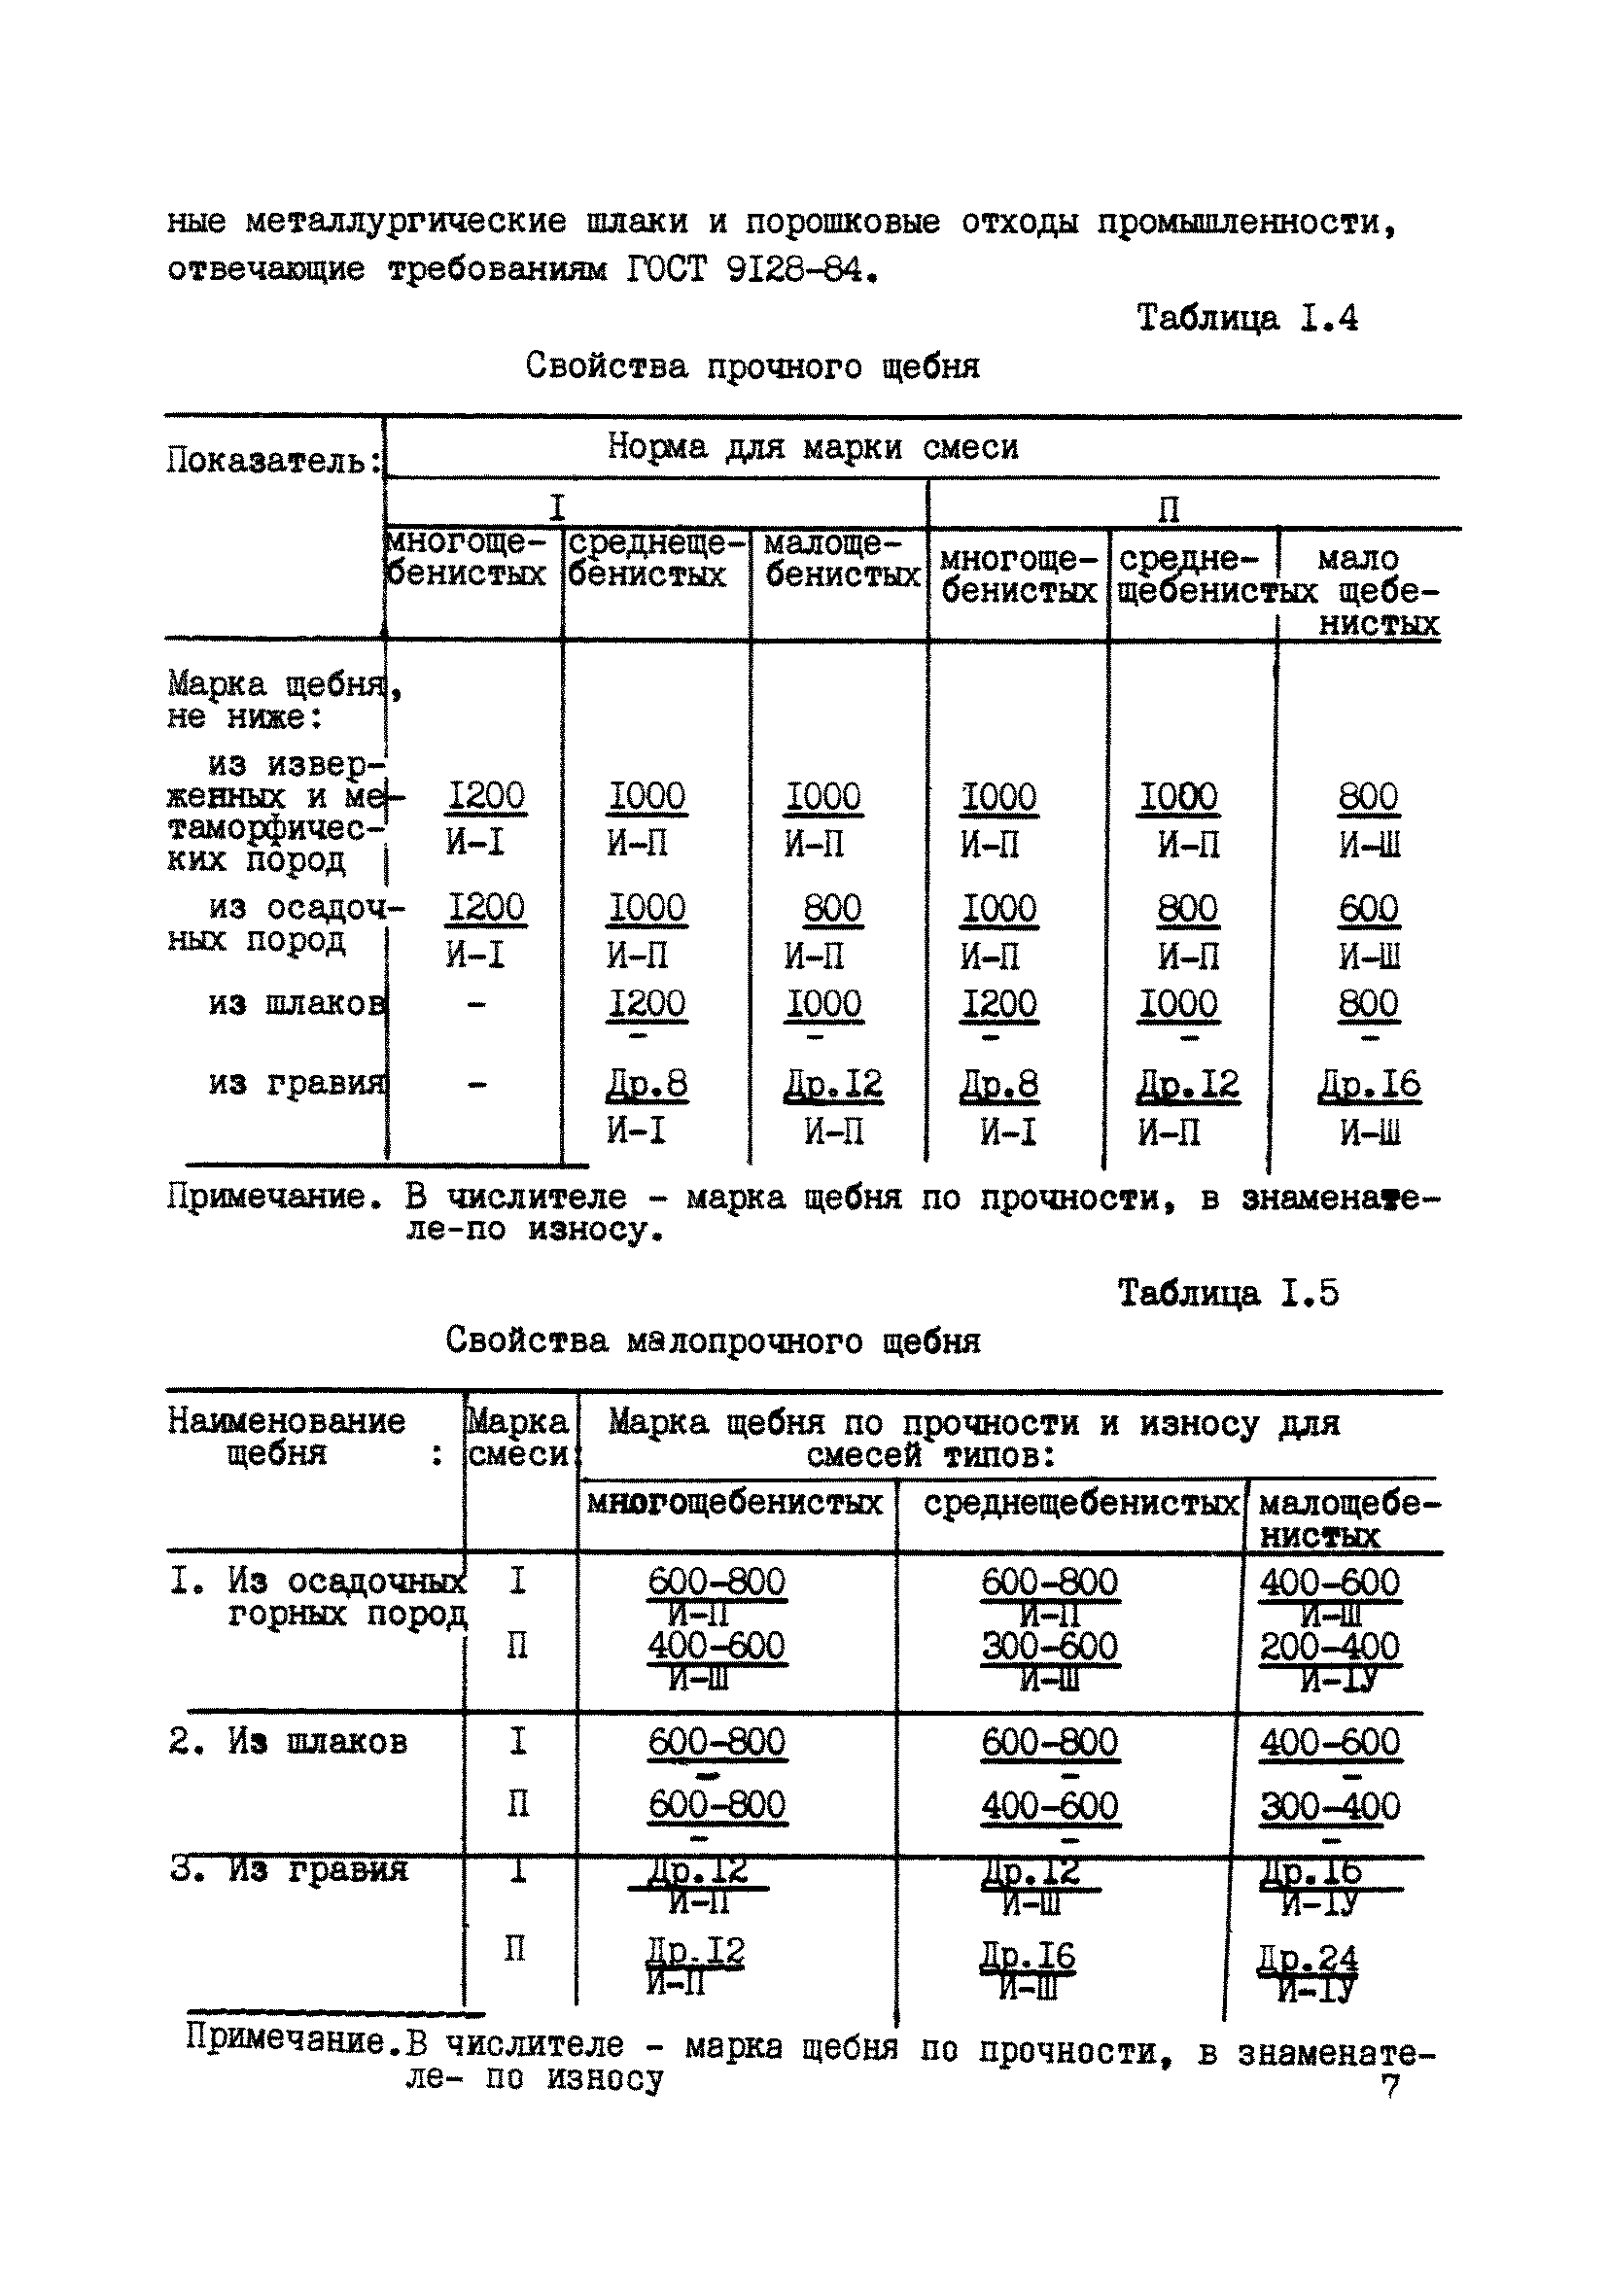 ТУ 218 РСФСР 541-85